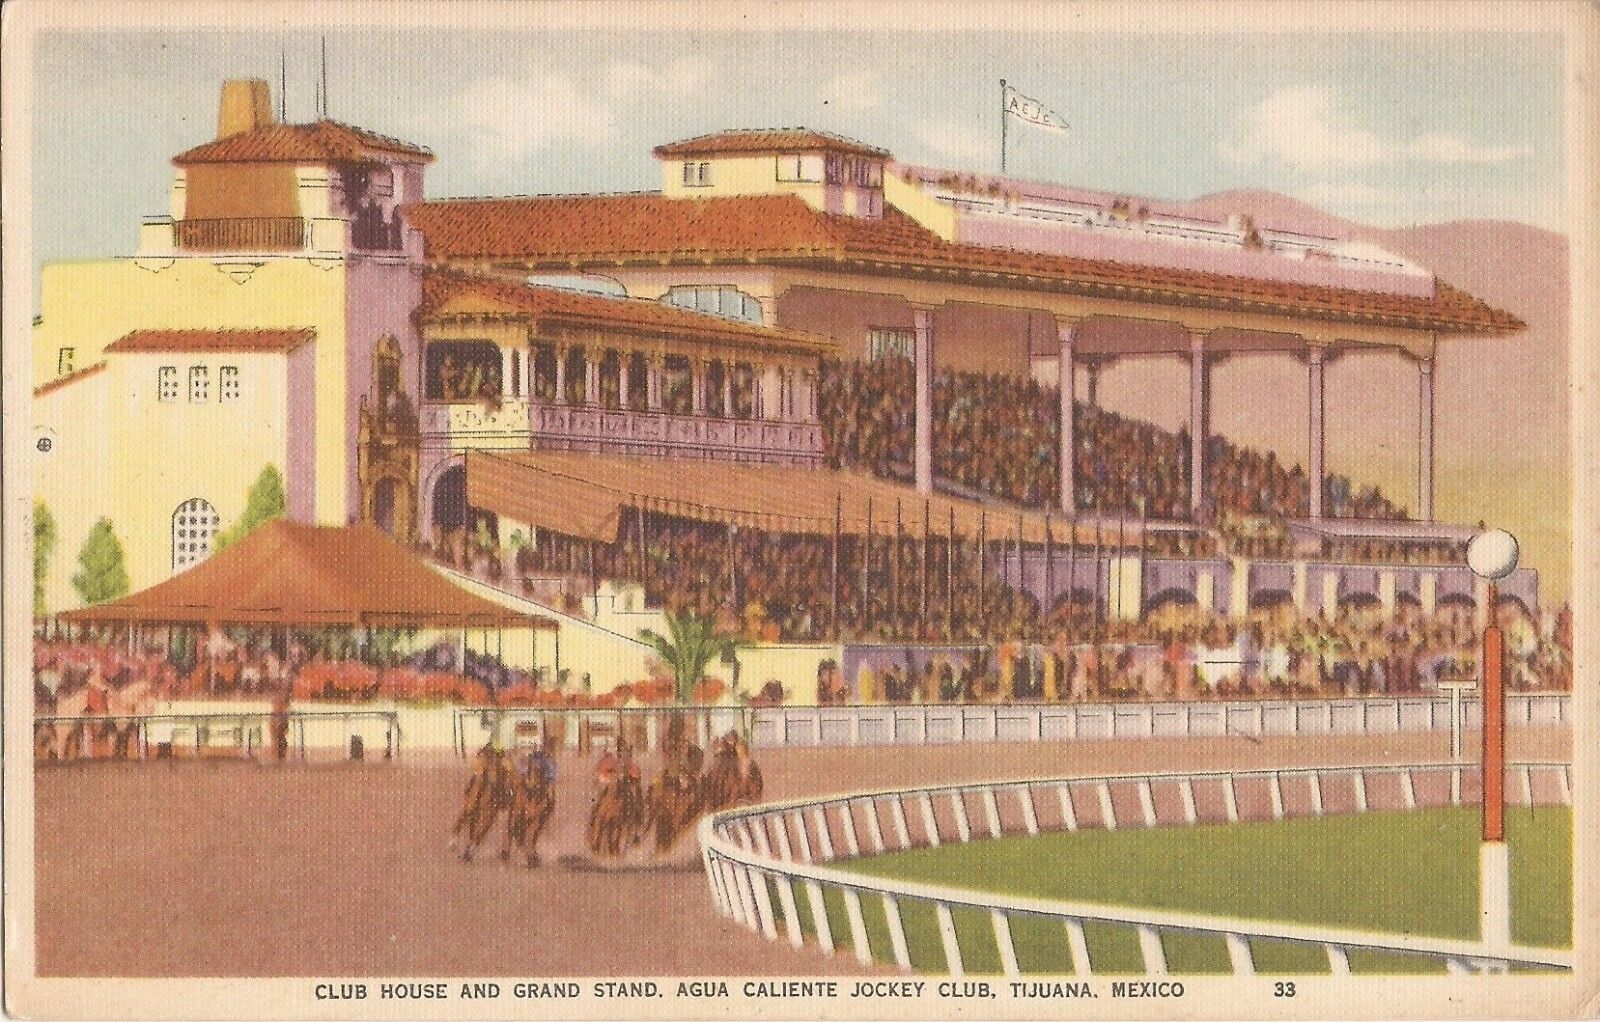 Tijuana, MEXICO - Racetrack - Aguas Caliente Jockey Club